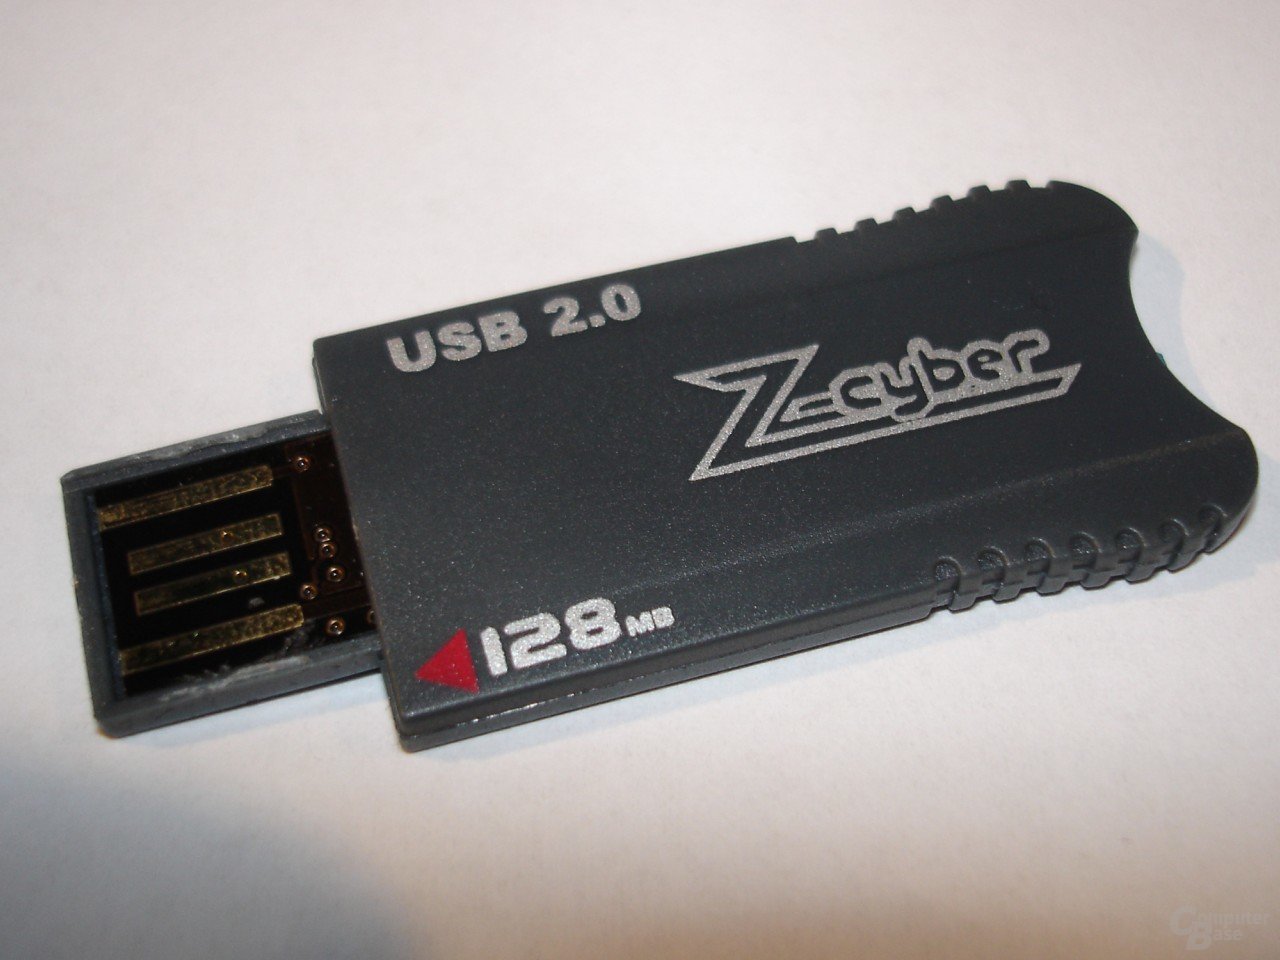 Z-Cyber Proton Stick USB 2.0